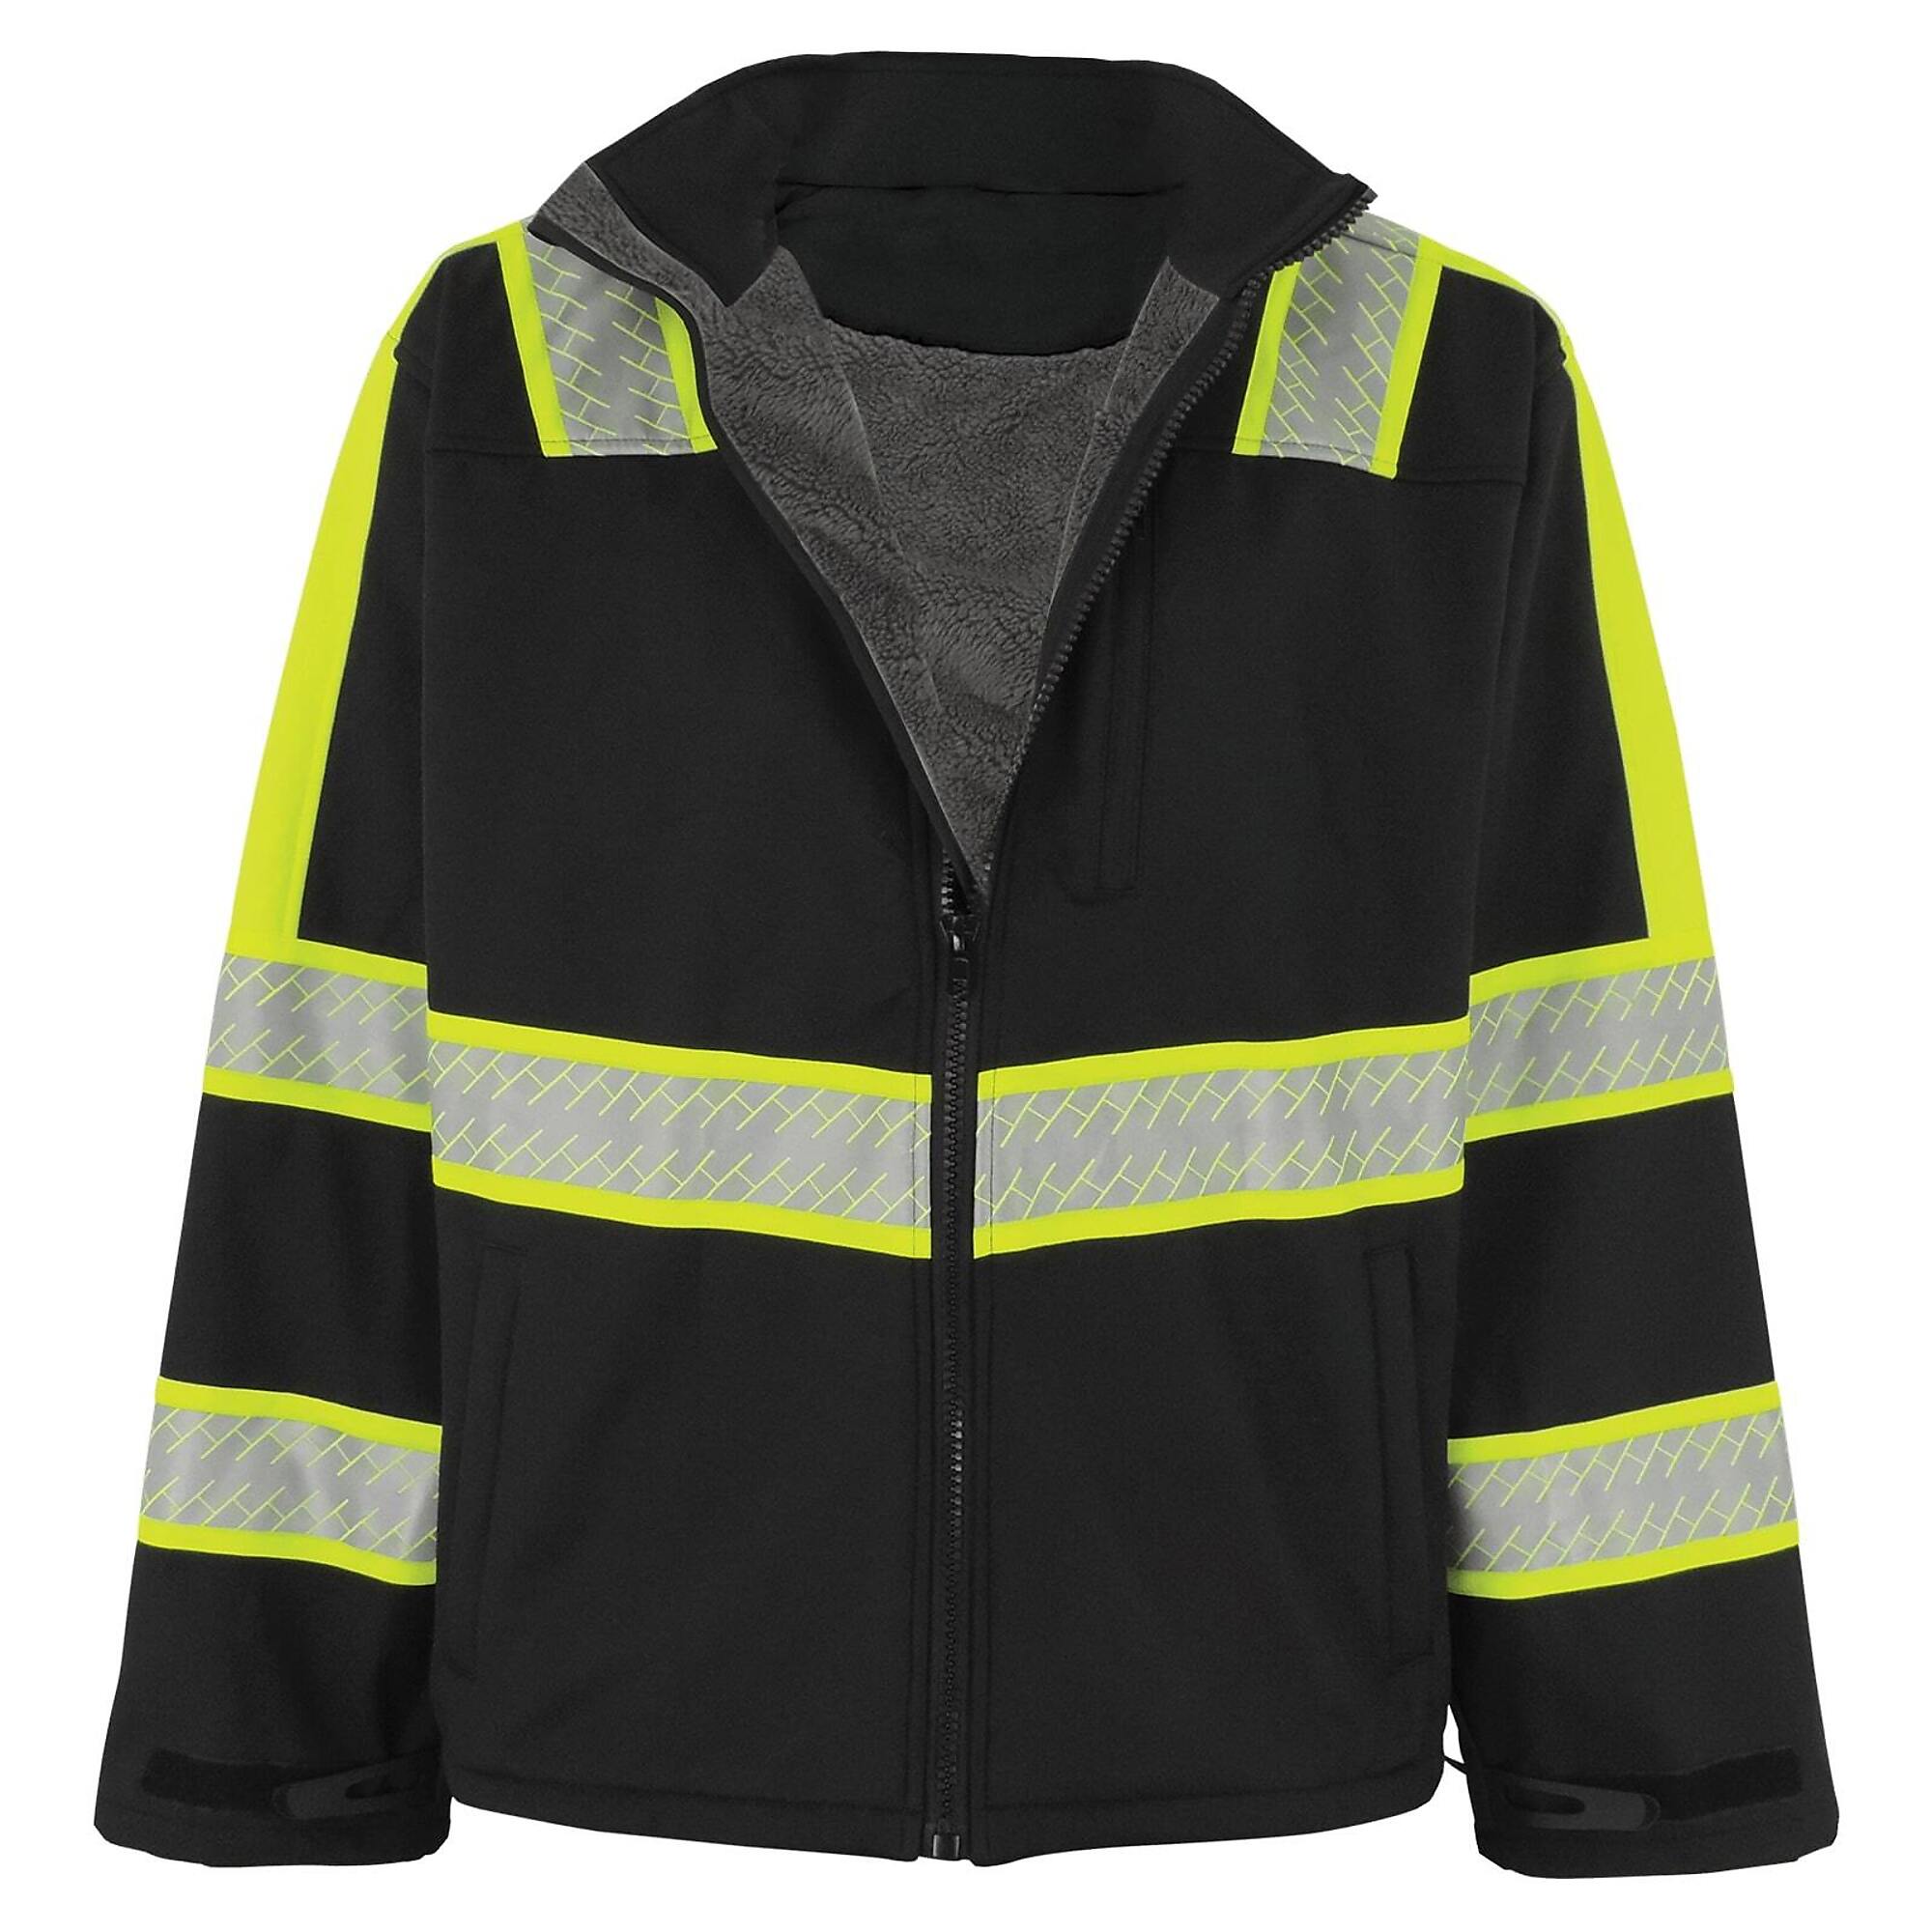 FrogWear, Prem Enhanced Visibility Black Sherpa-Lined Jacket, Size M, Color Black with Silver Reflective, Model EV-SJ1-M